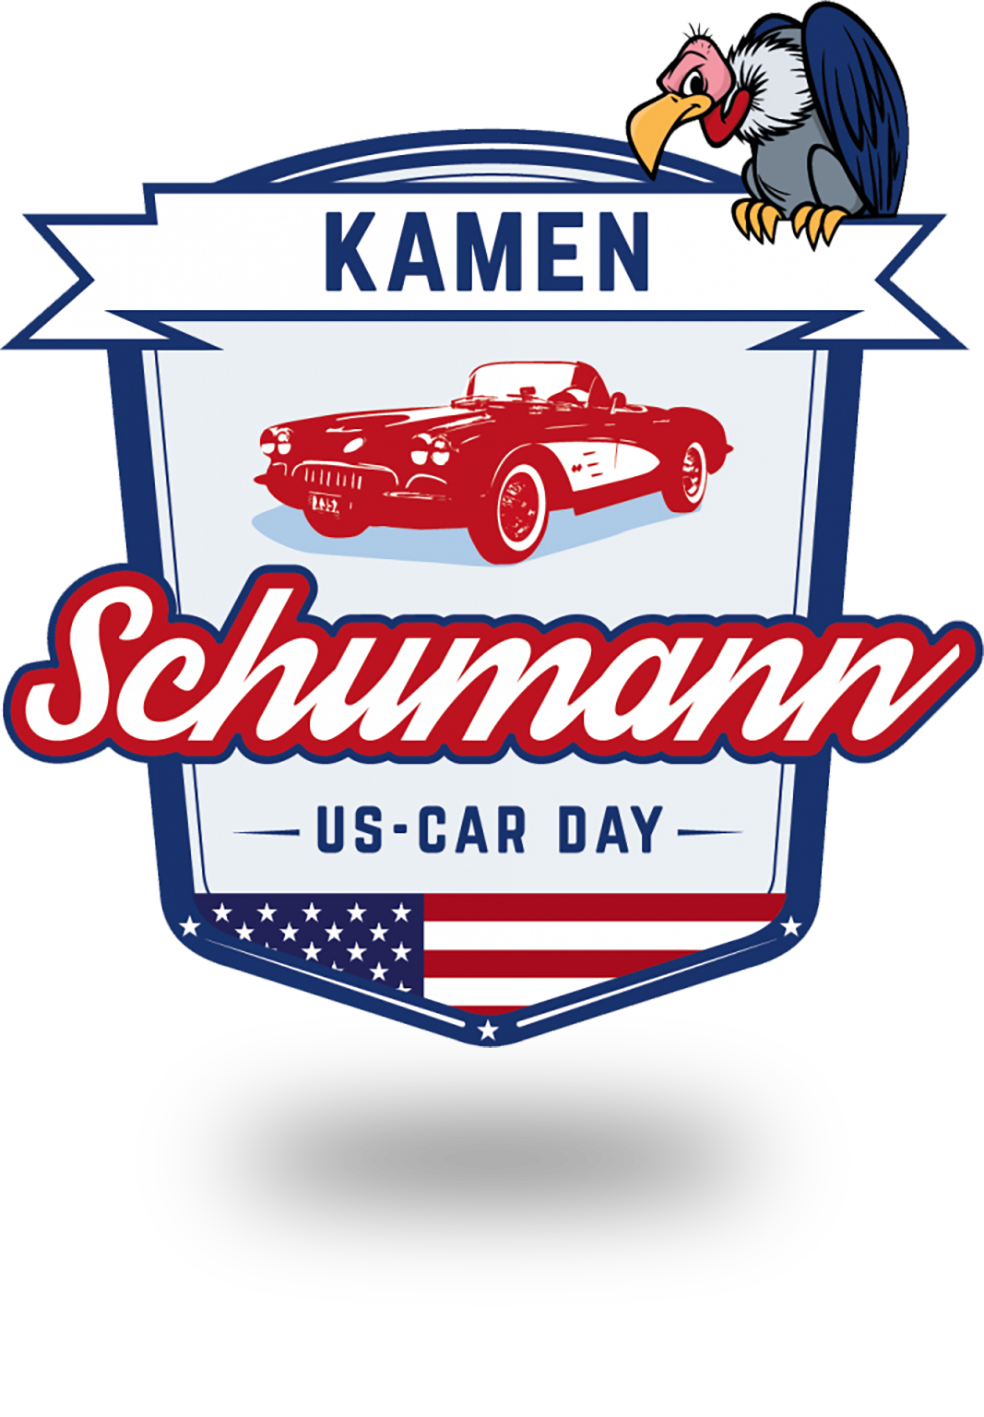 Schumann US-Car Day